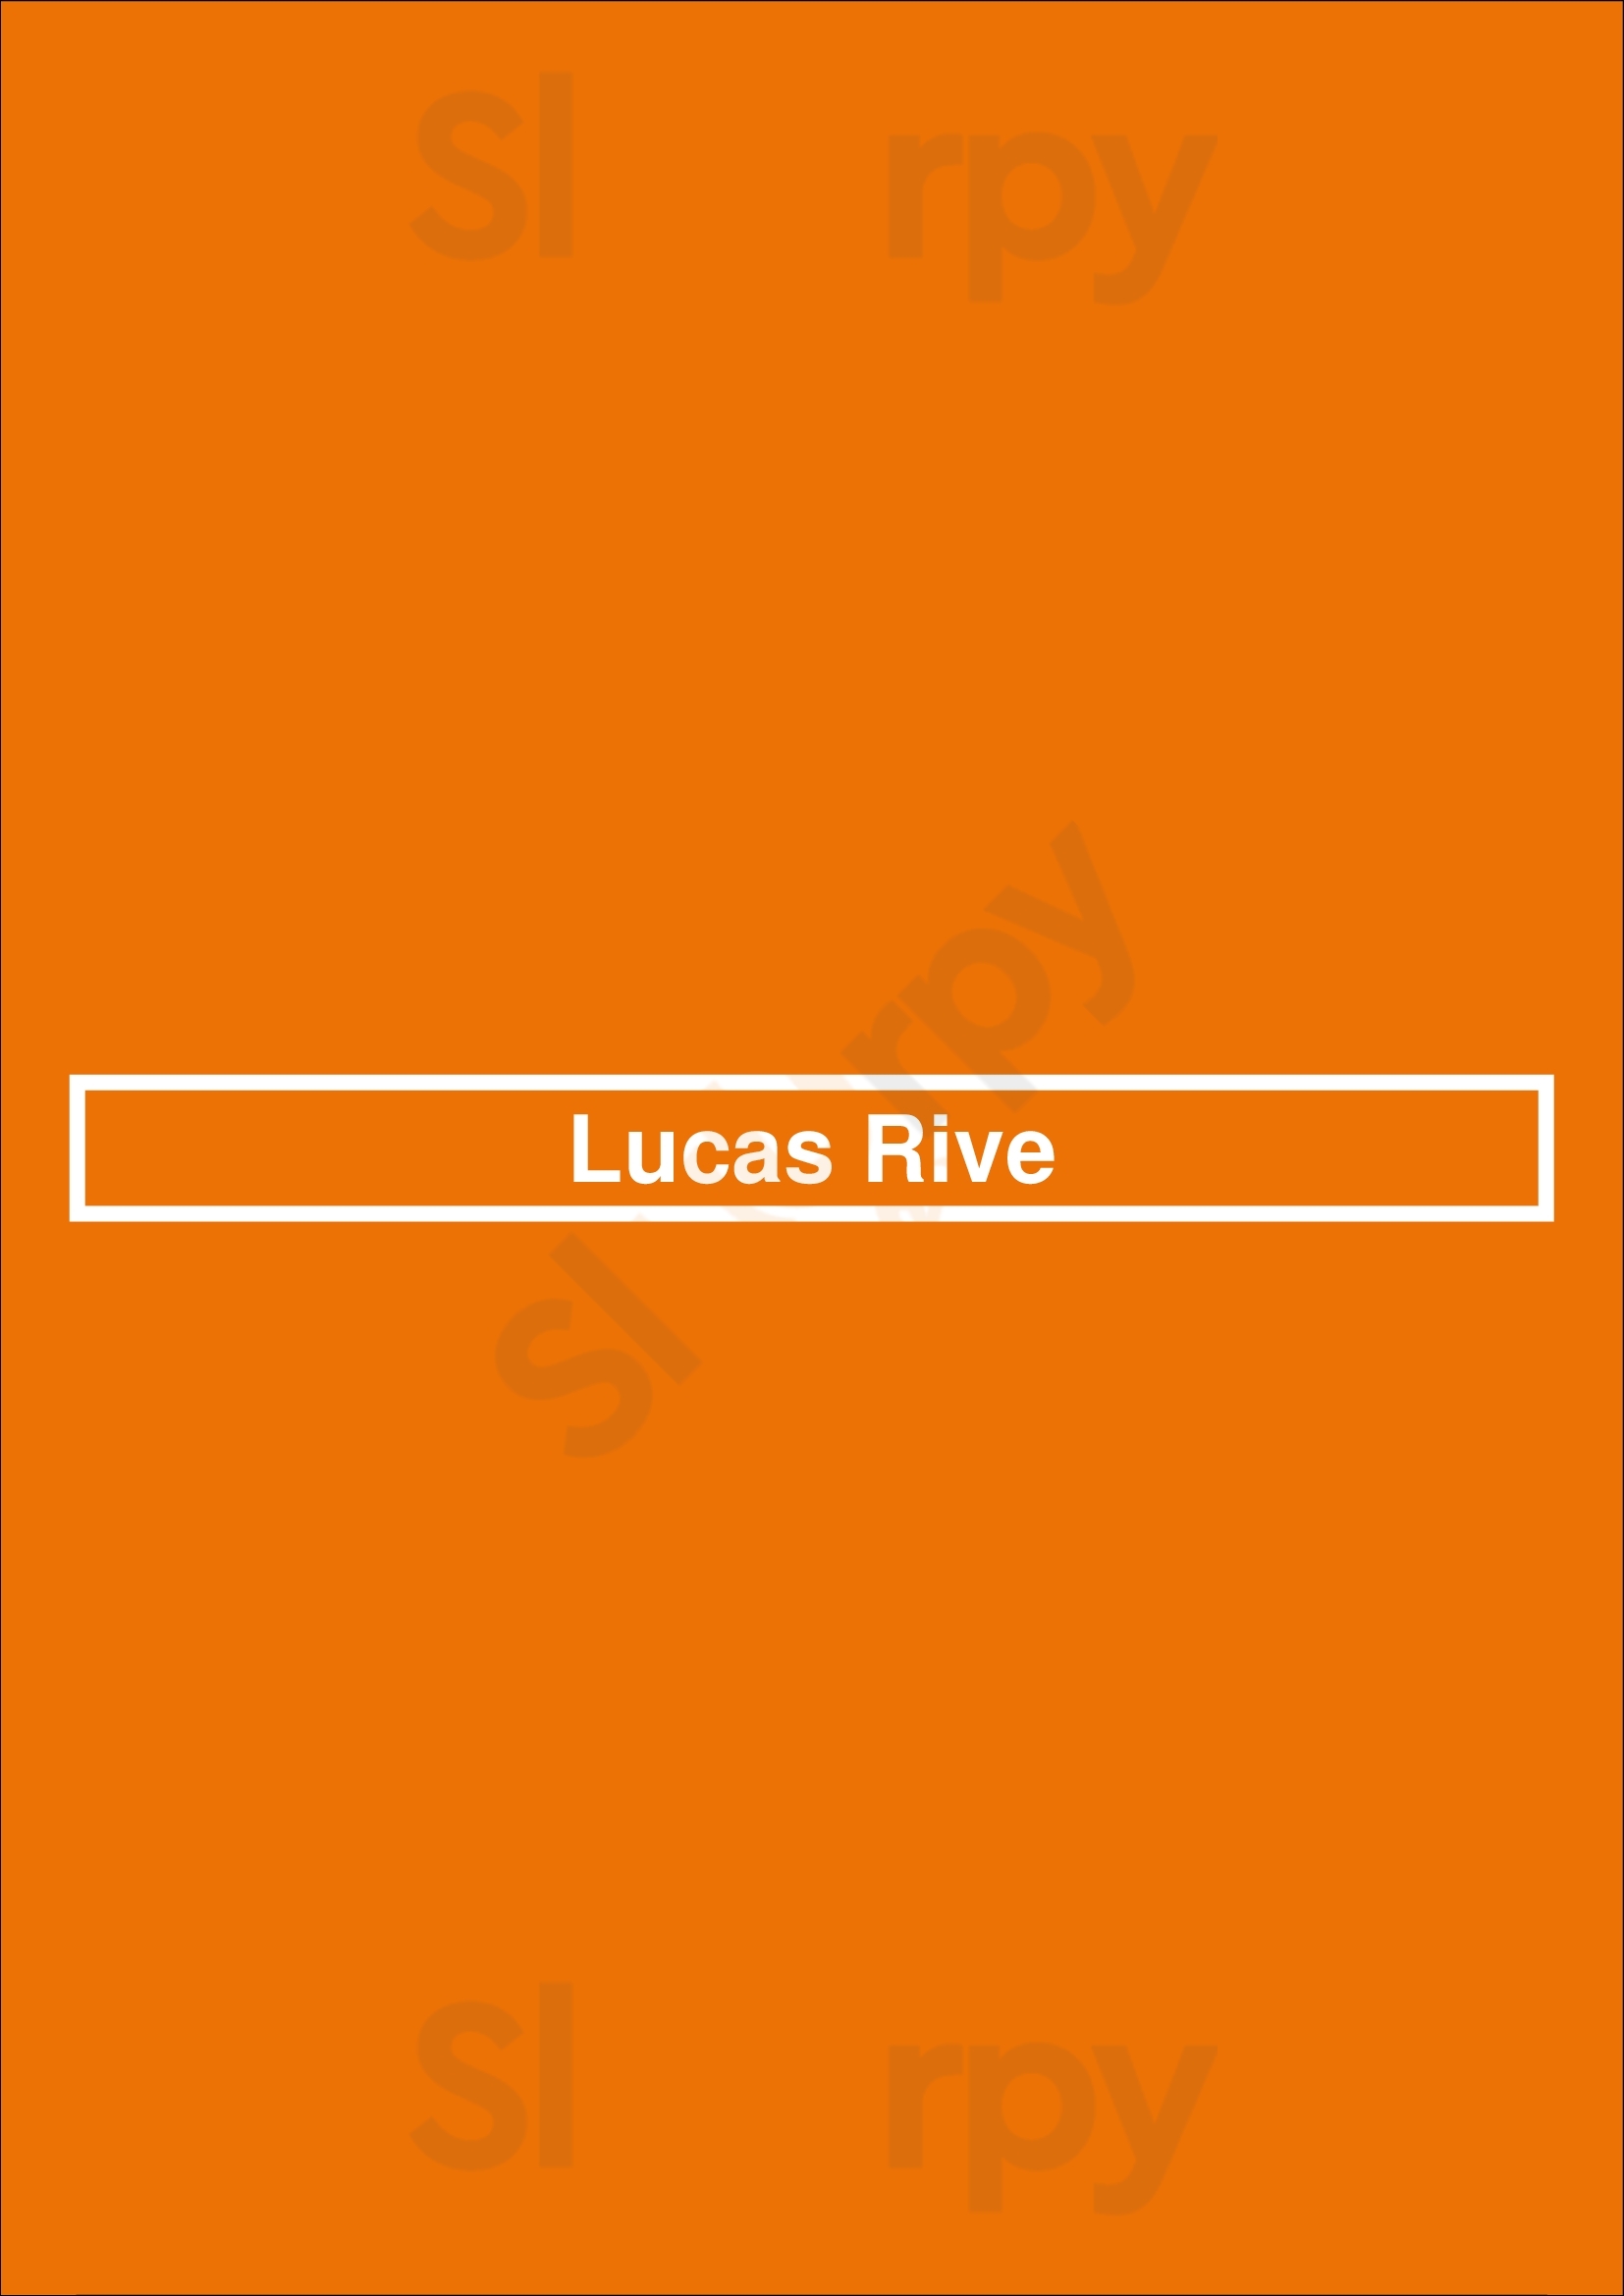 Lucas Rive Hoorn Menu - 1